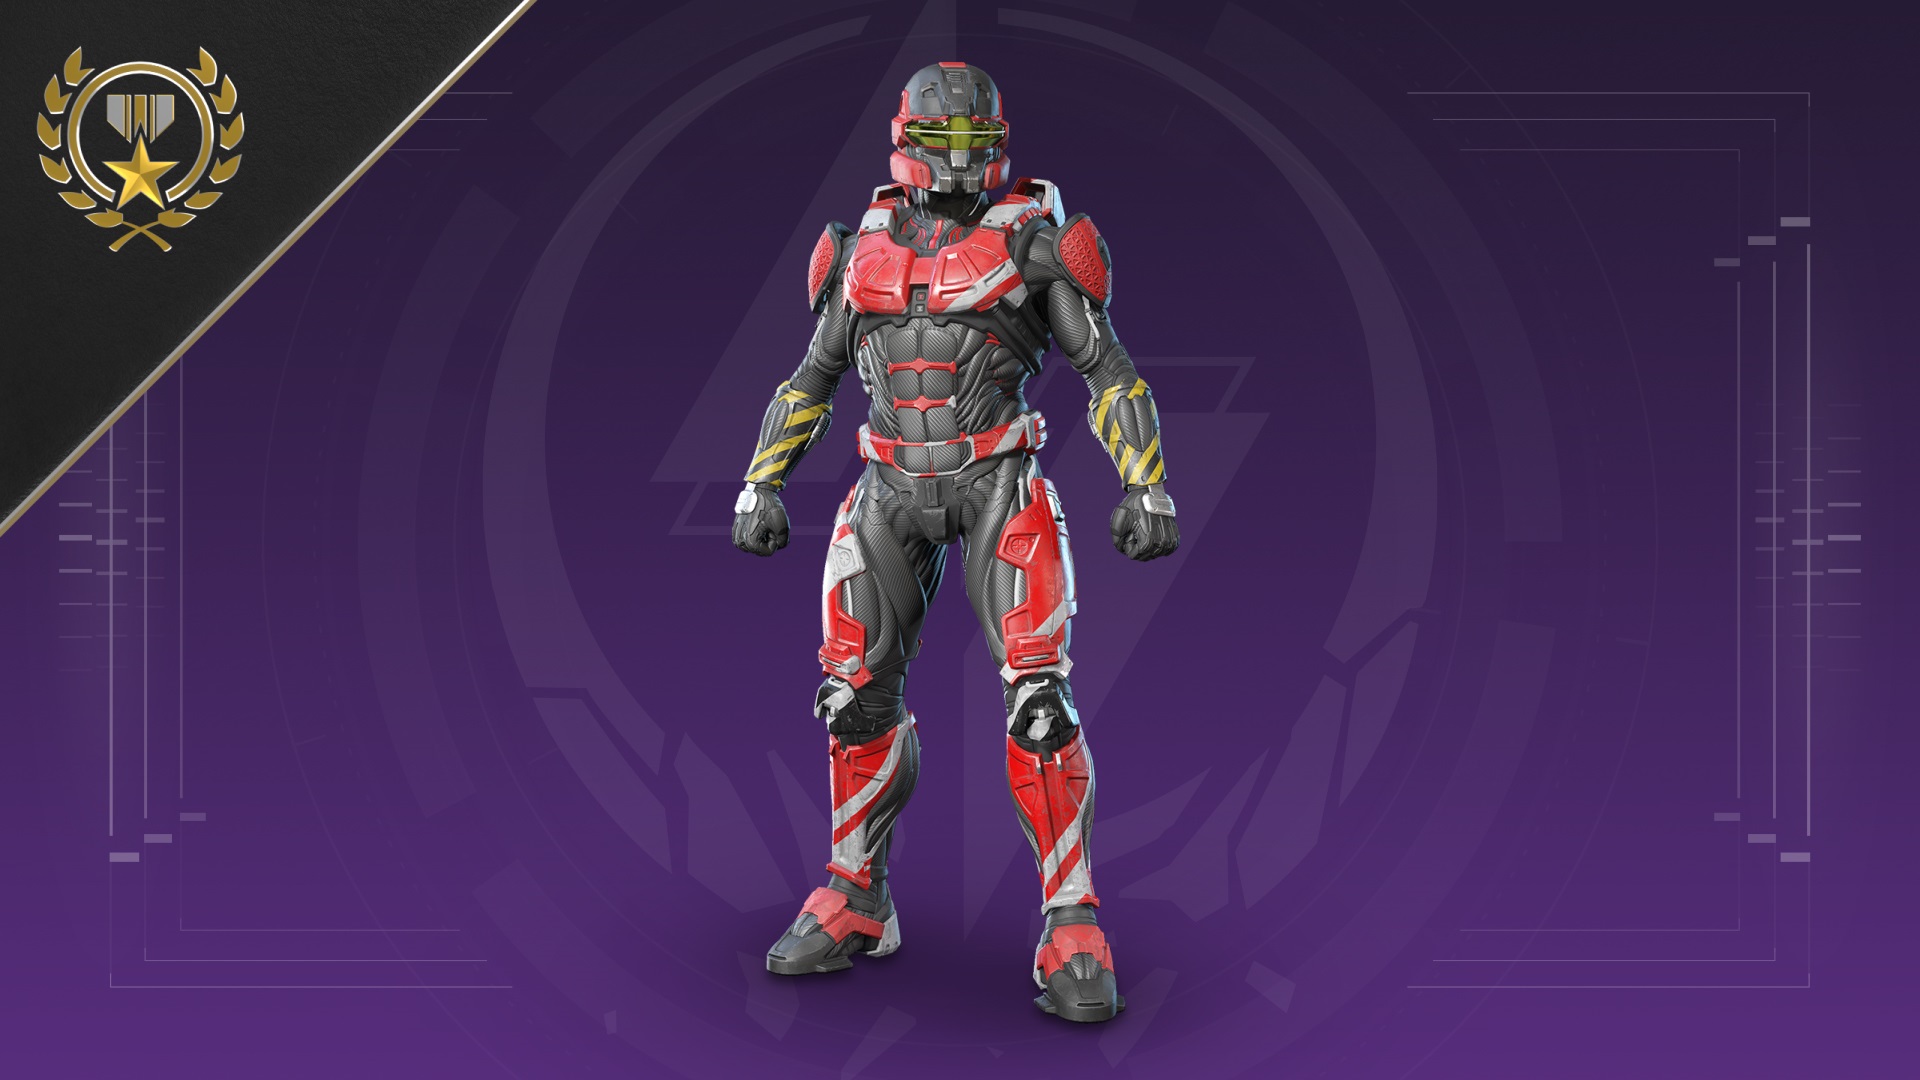 Halo Infinite image of the Redline Interrupt armor coating